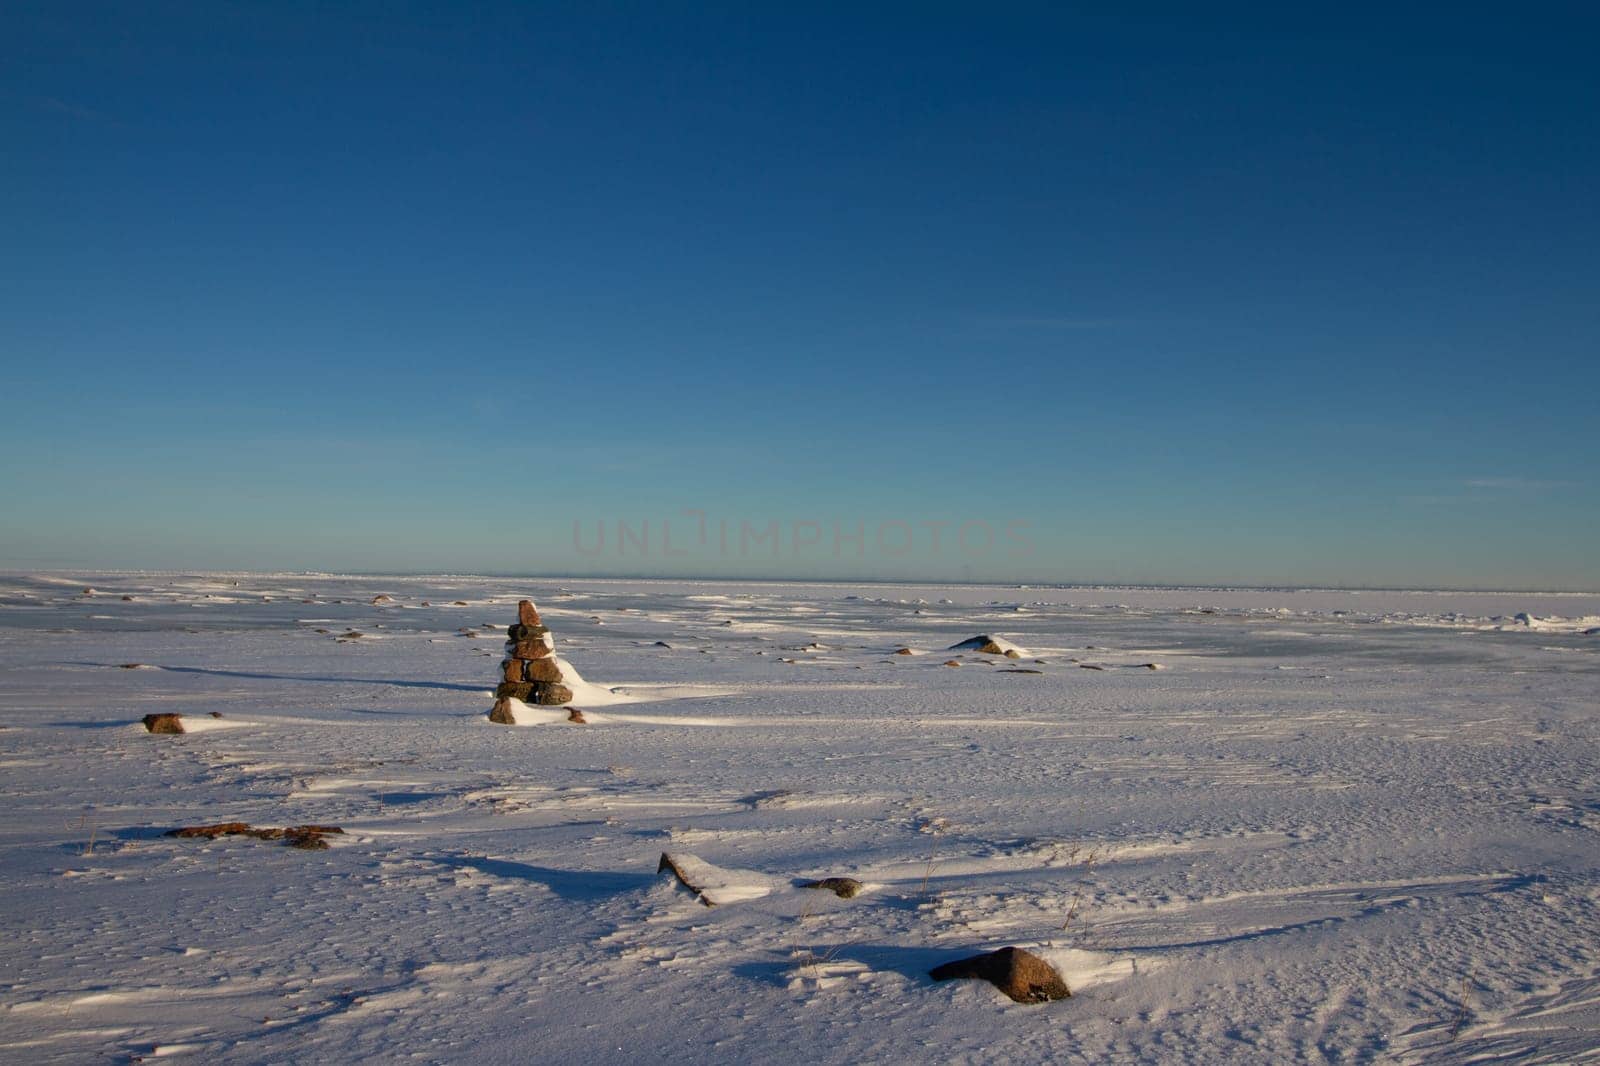 Frozen arctic landscape with snow on the ground near Arviat, Nunavut by Granchinho